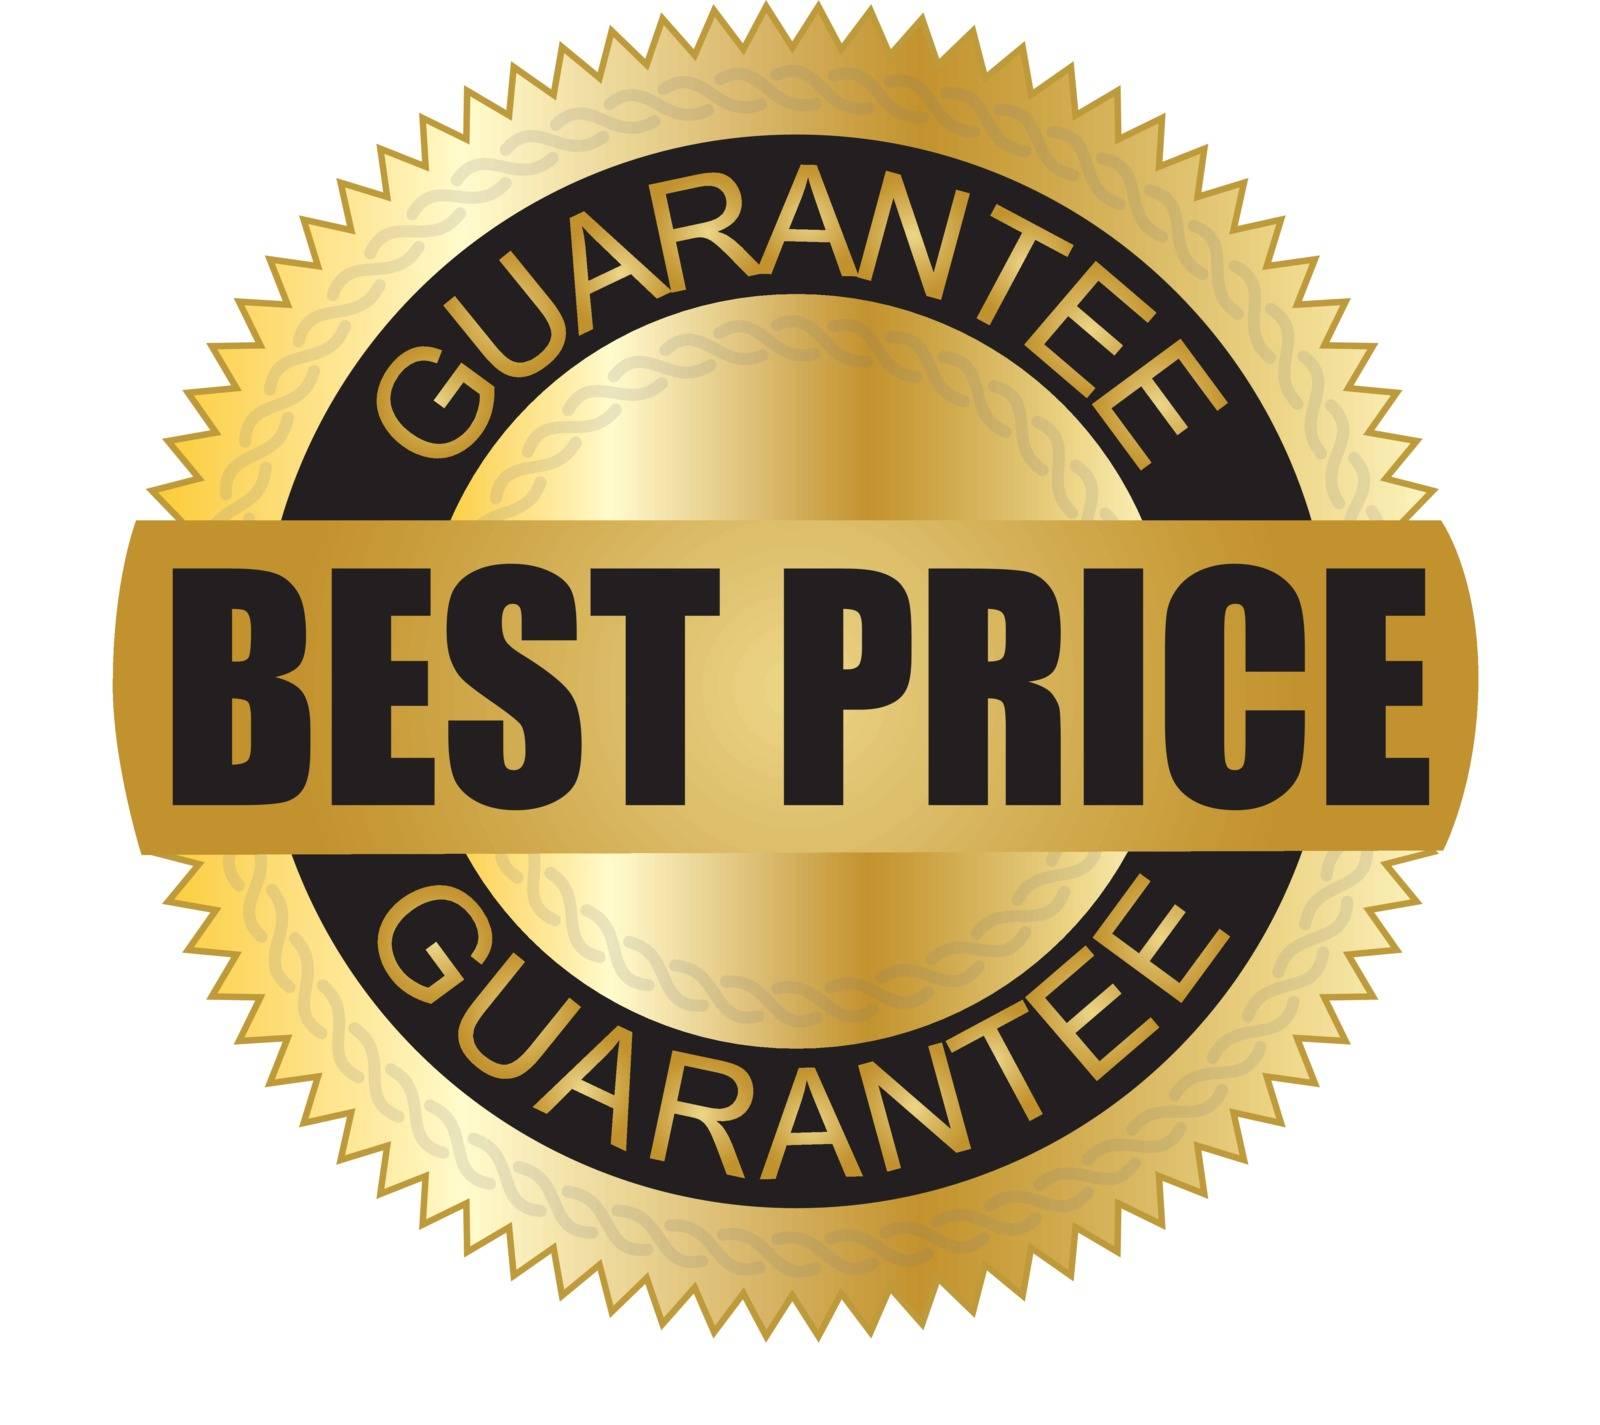 Best price guarantee label by carmenbobo